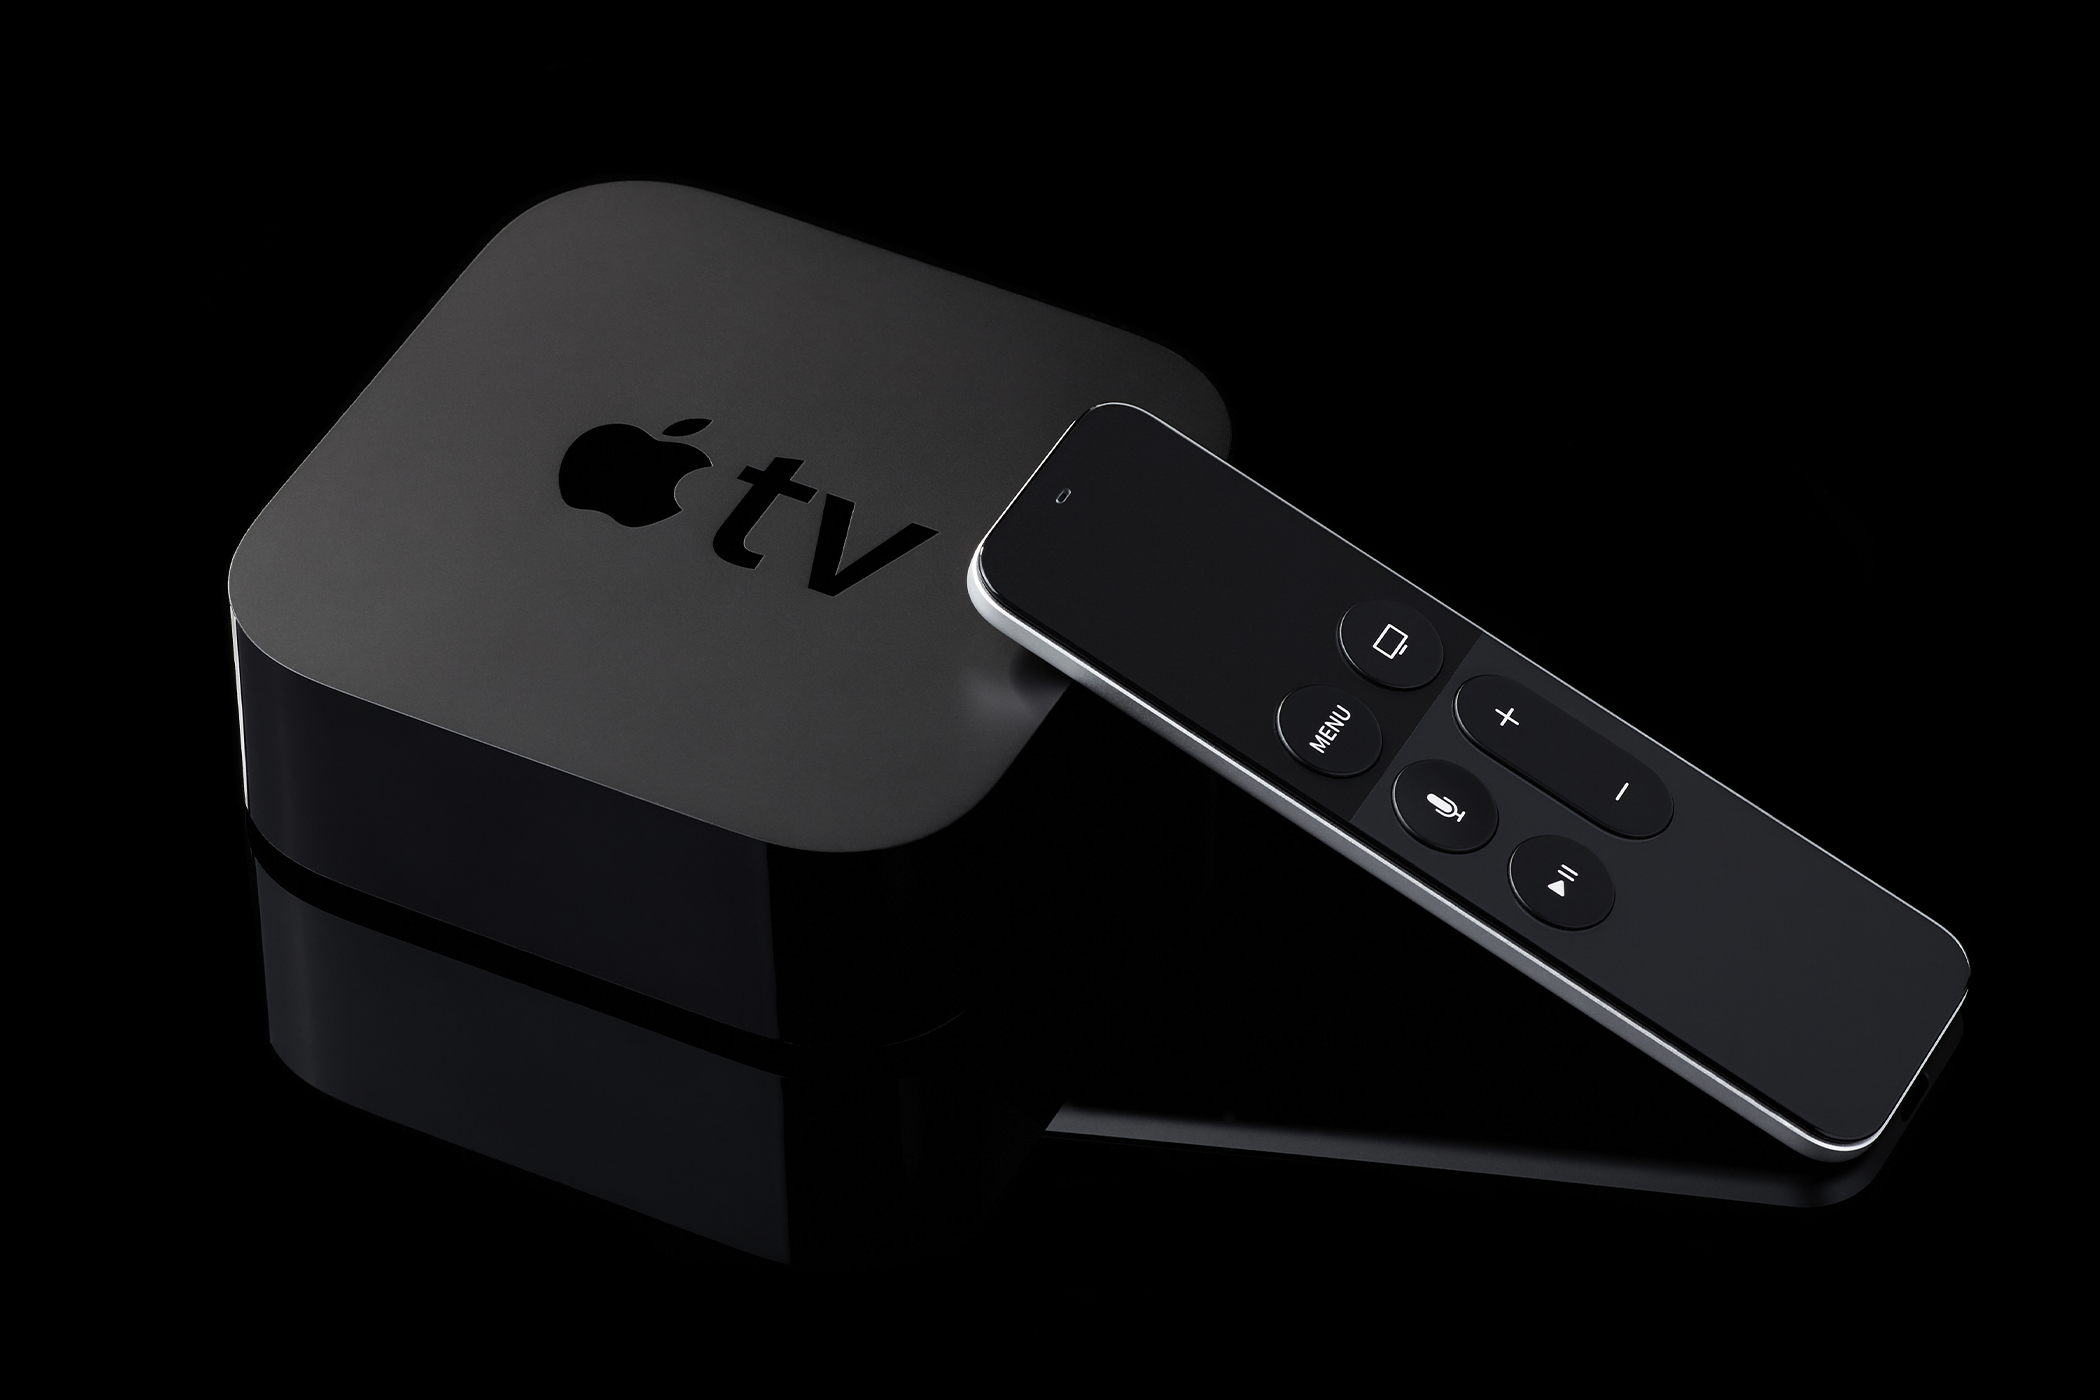 Apple TV device on a black background.